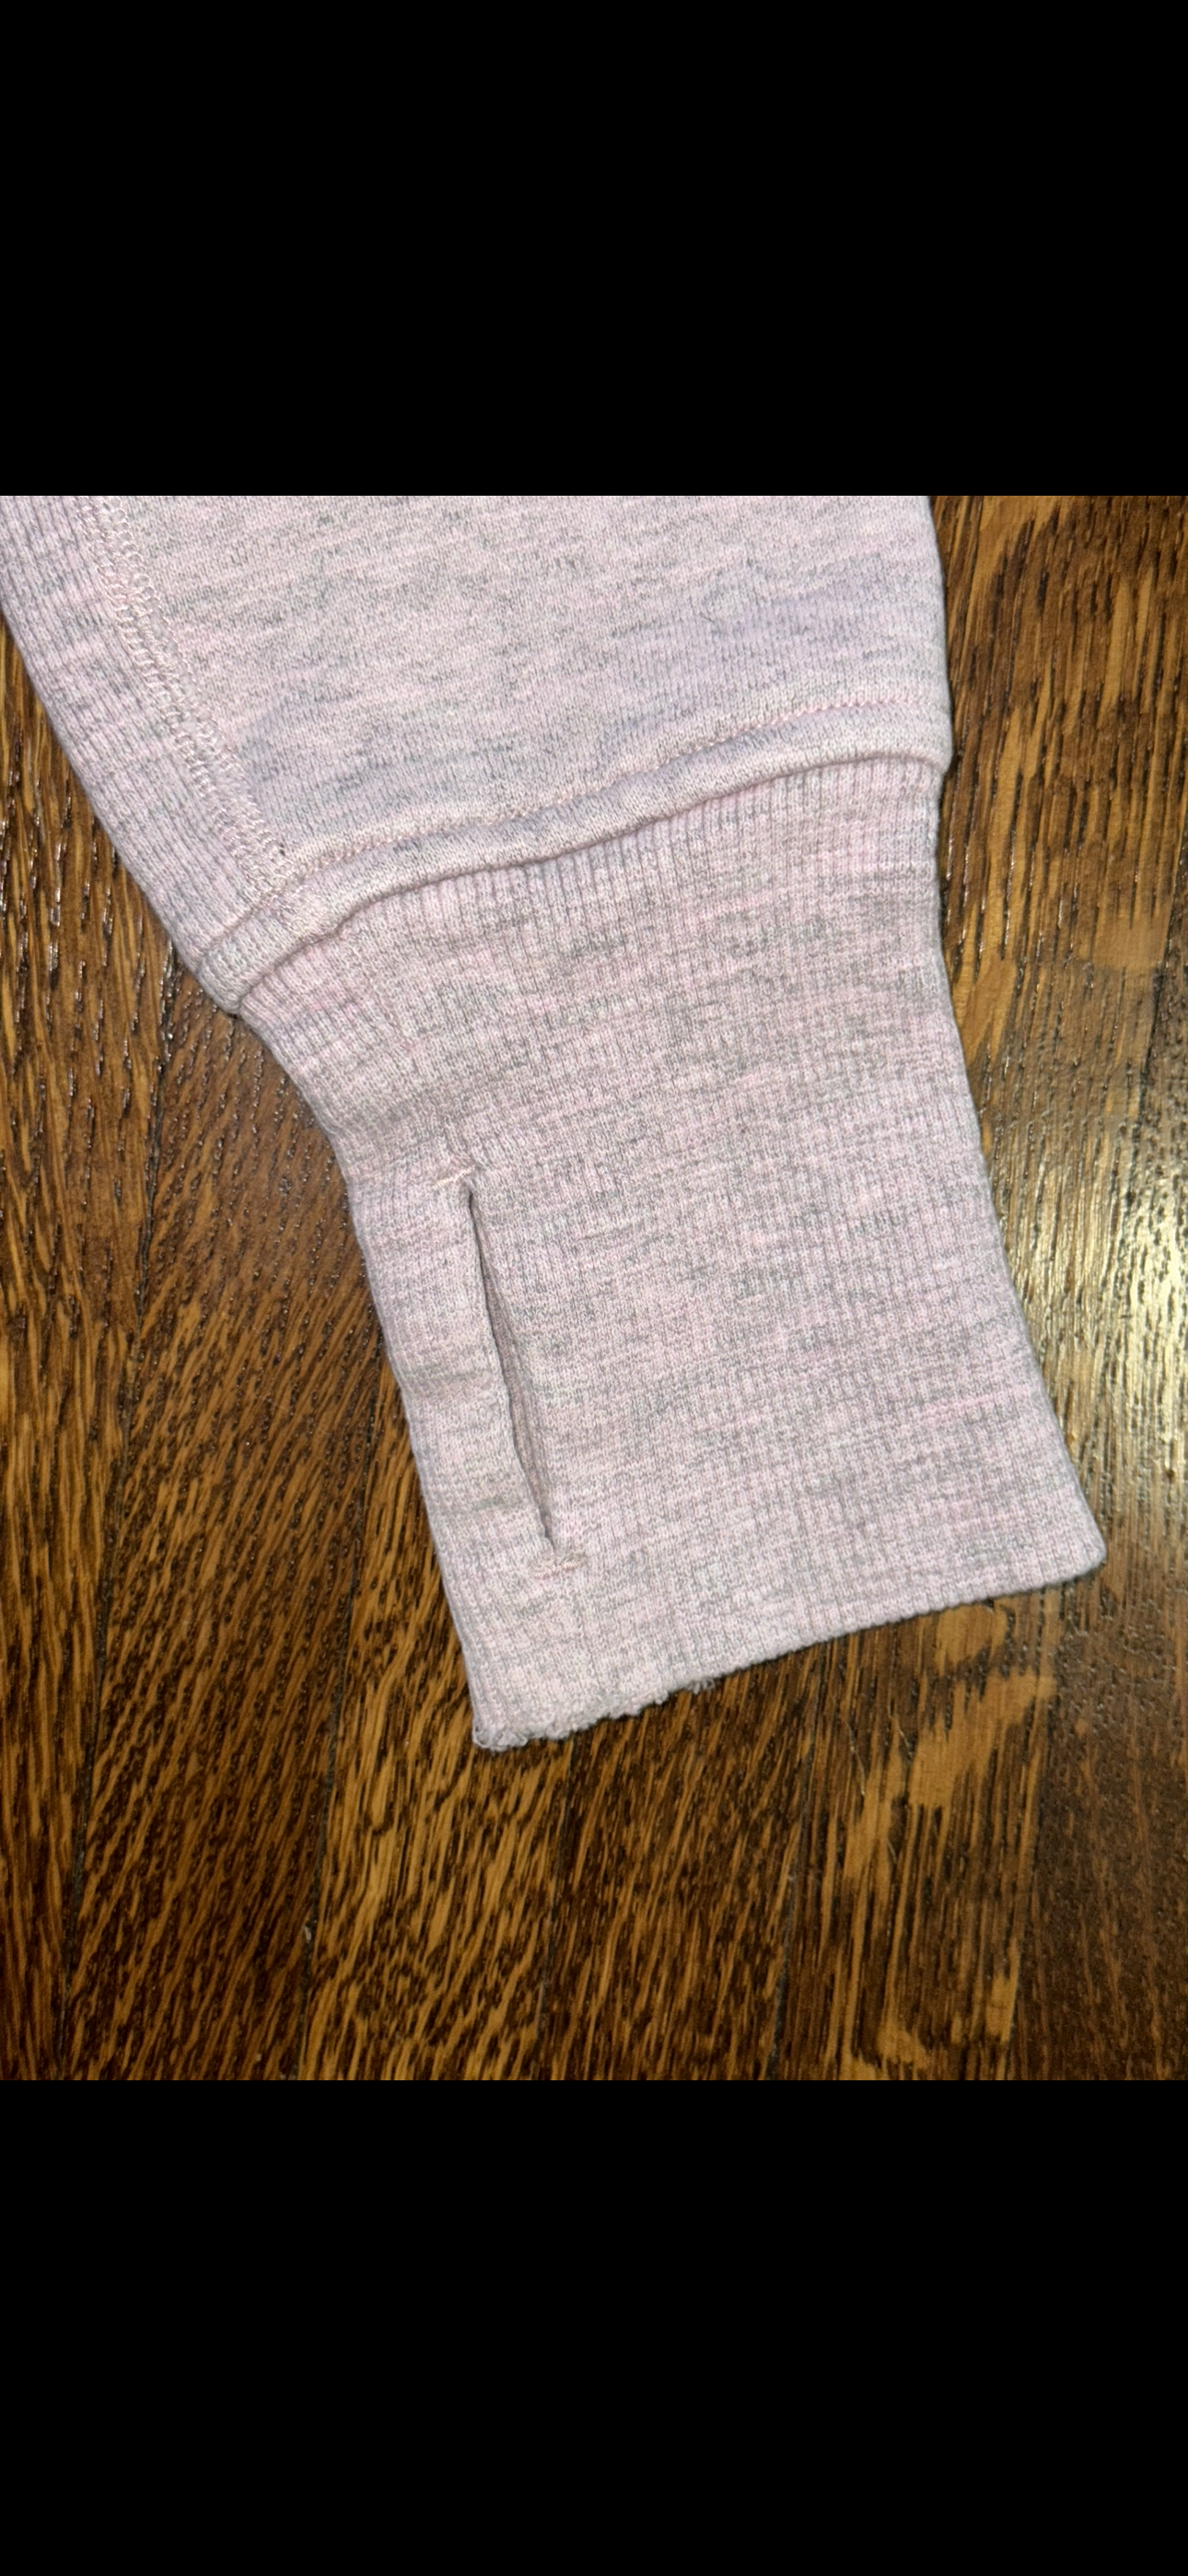 Lululemon Scuba Jacket - Light Pink - Size 6 (Small / Medium)